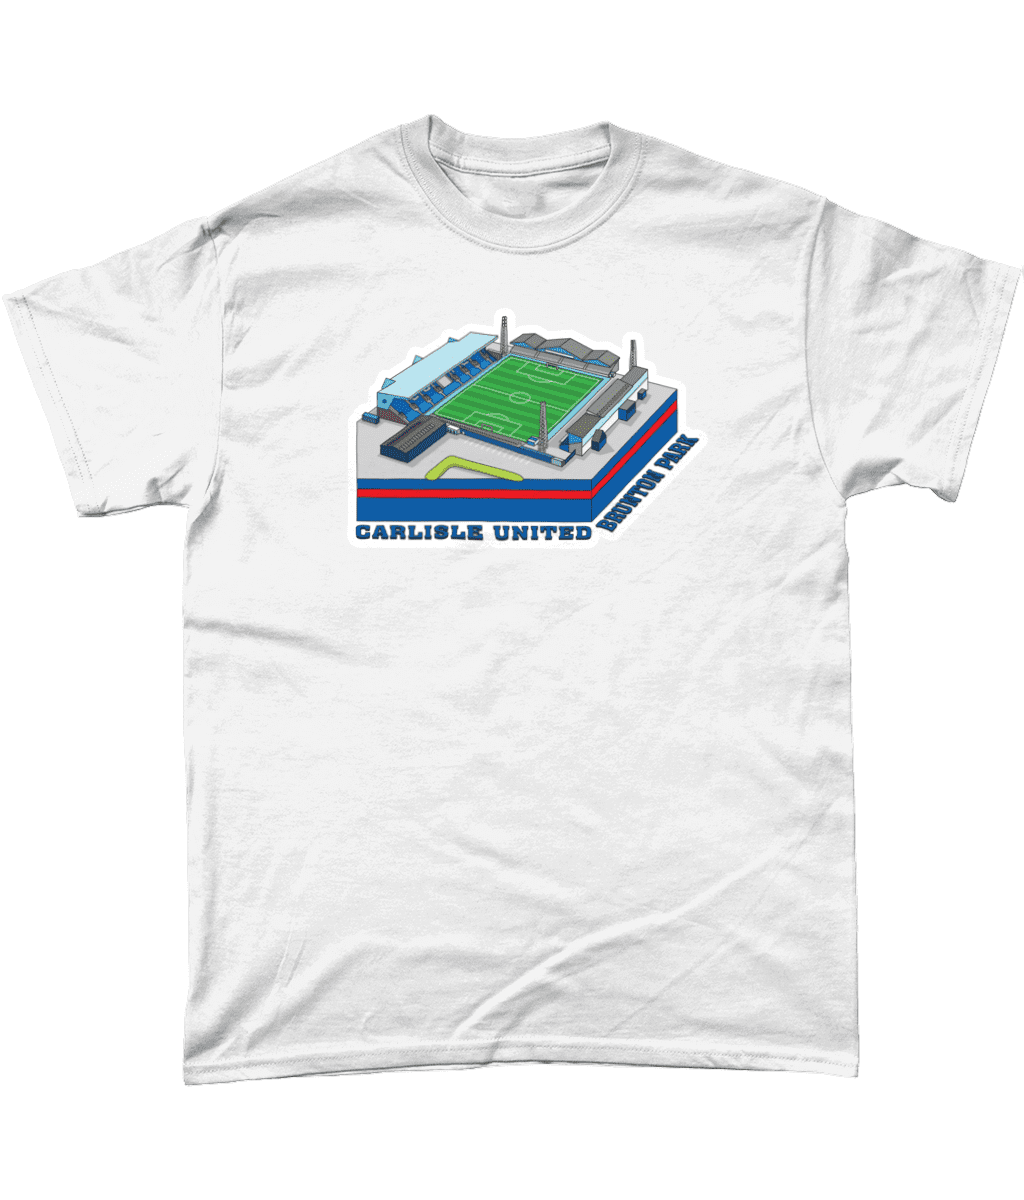 Carlisle United Brunton Park Football Stadium T Shirt Design White